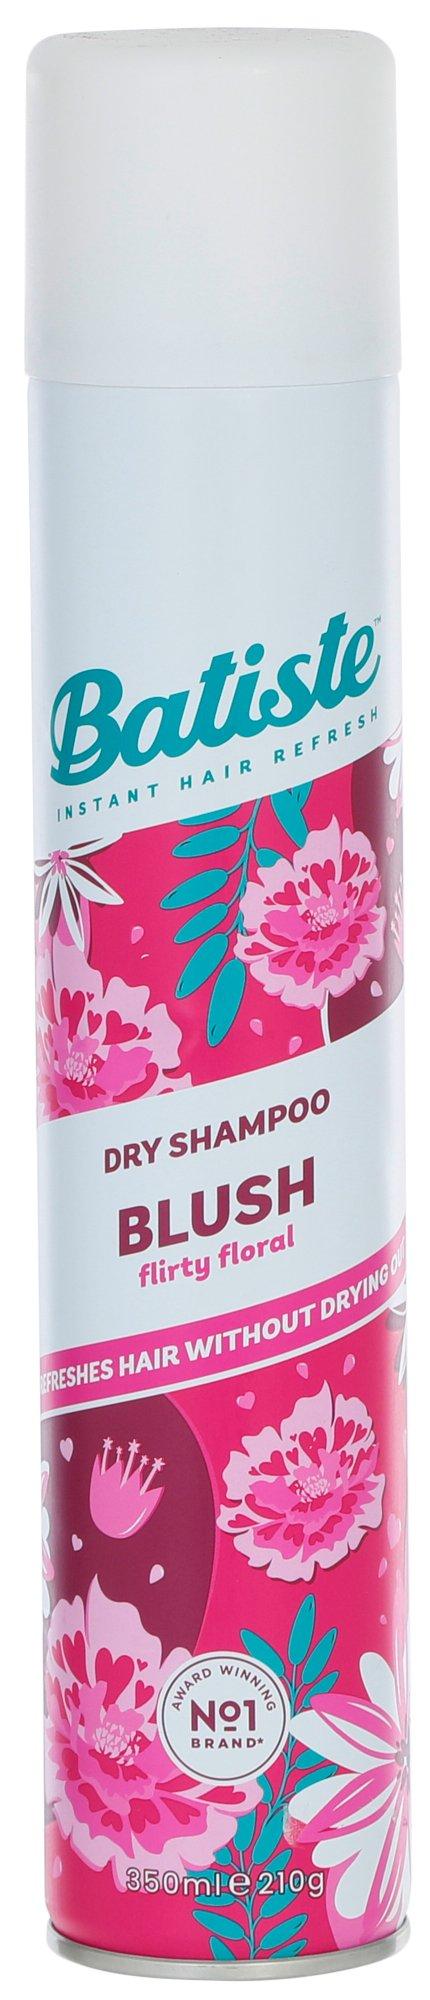 11.8 oz Breezy Blush Flirty Floral Dry Shampoo